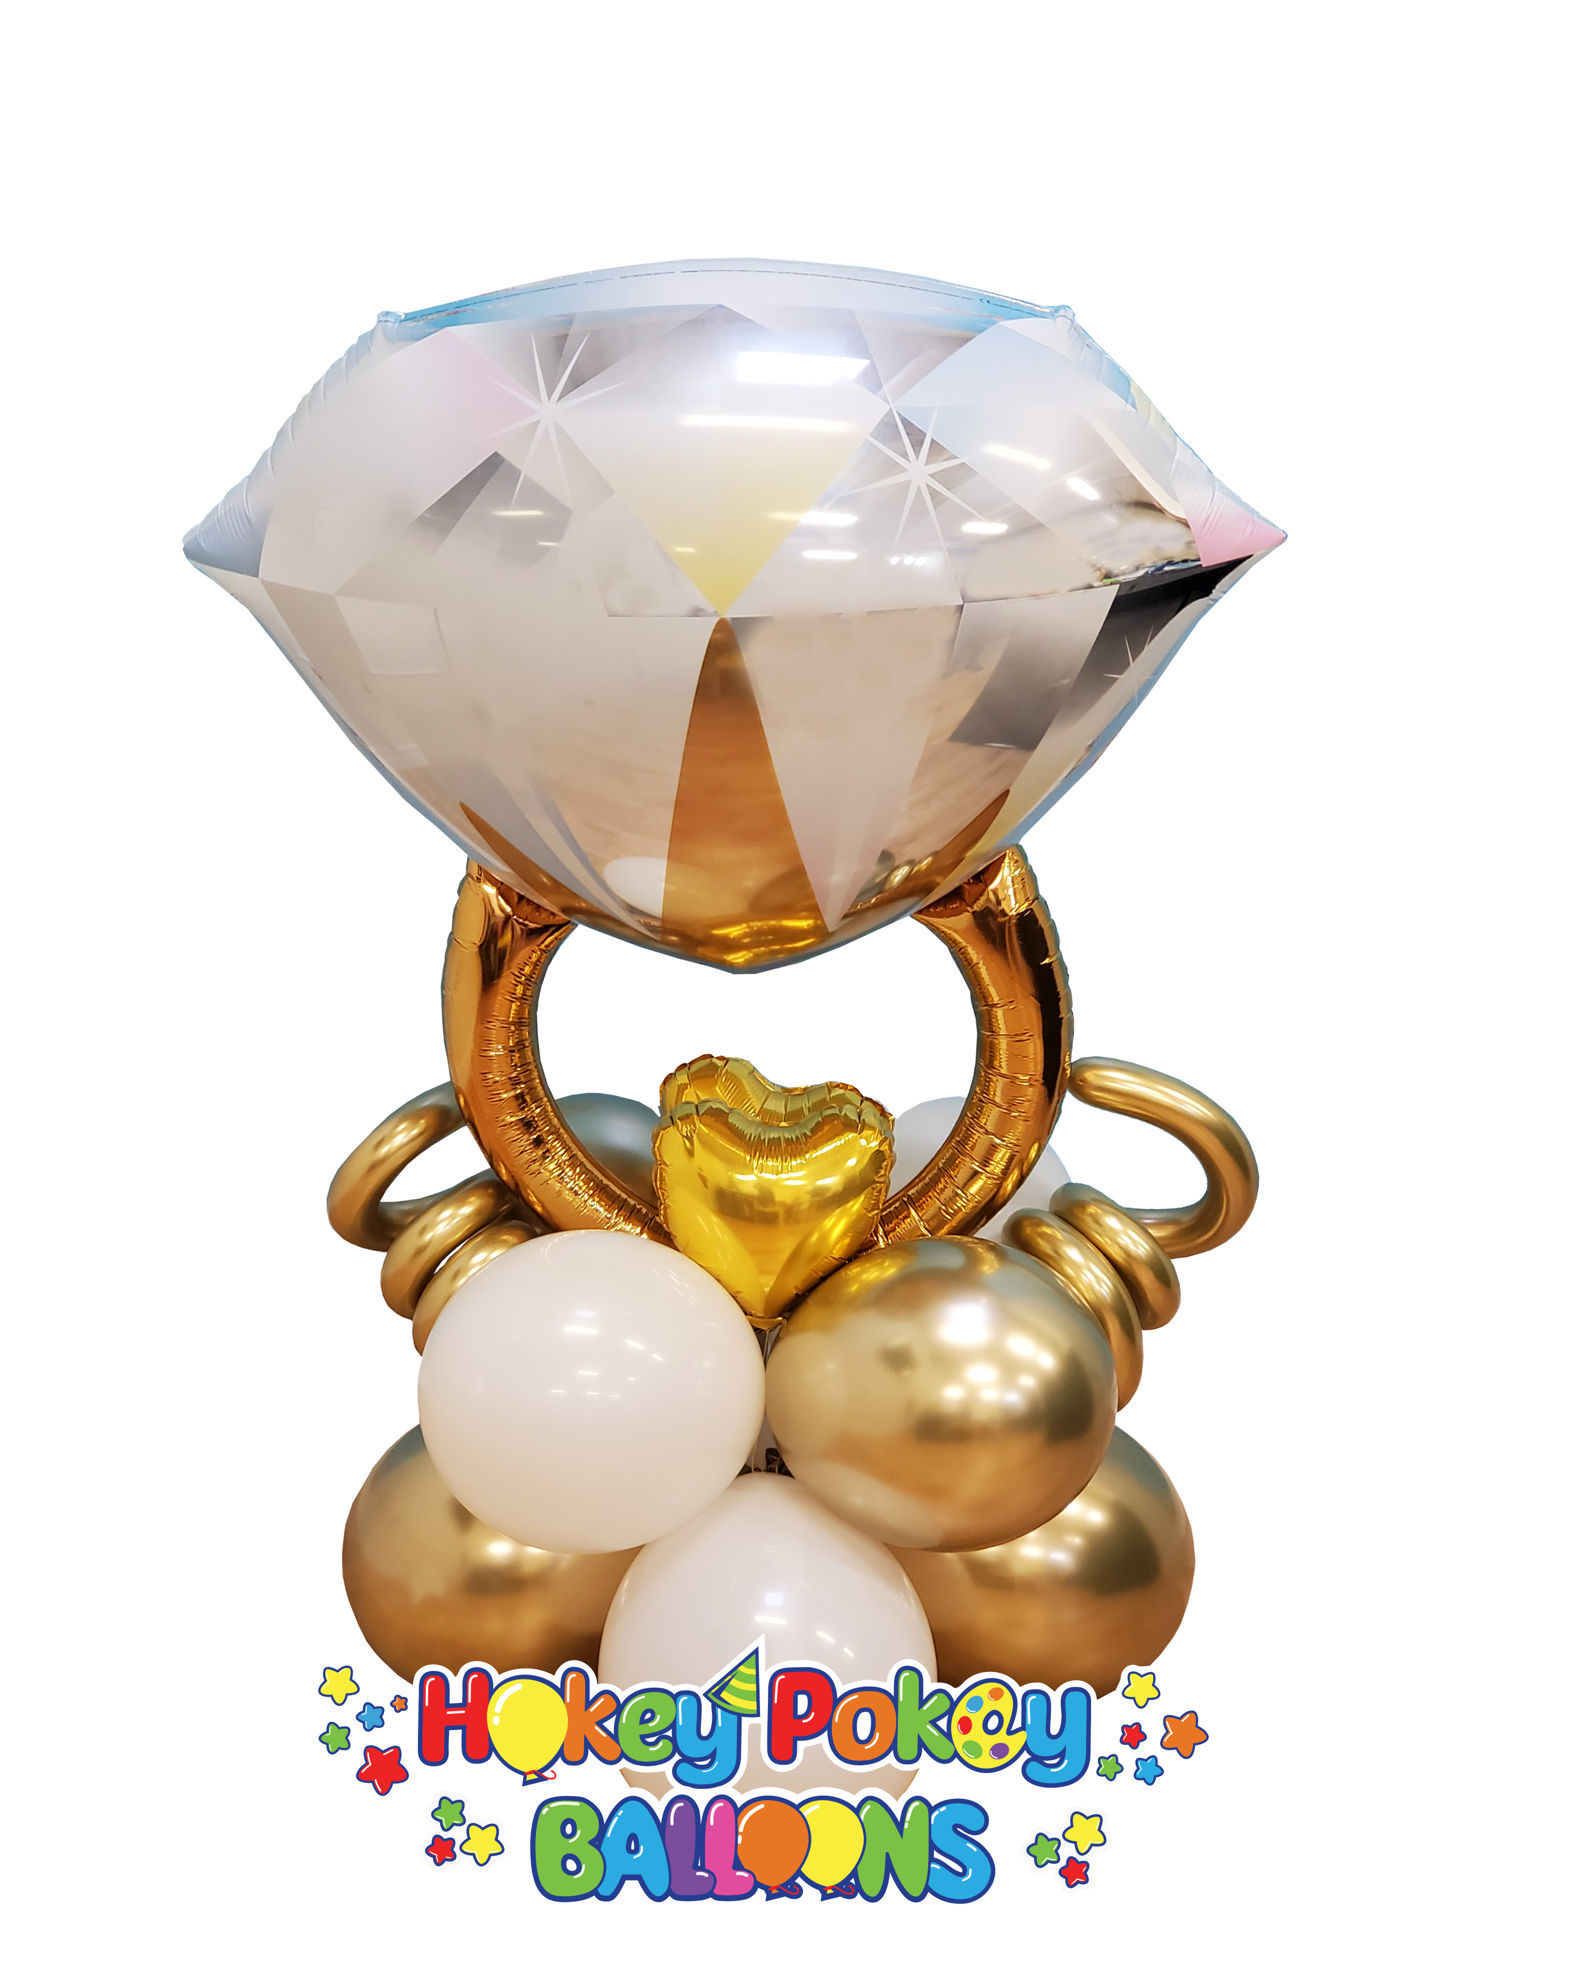 Picture of Diamond Ring Balloon Centerpiece